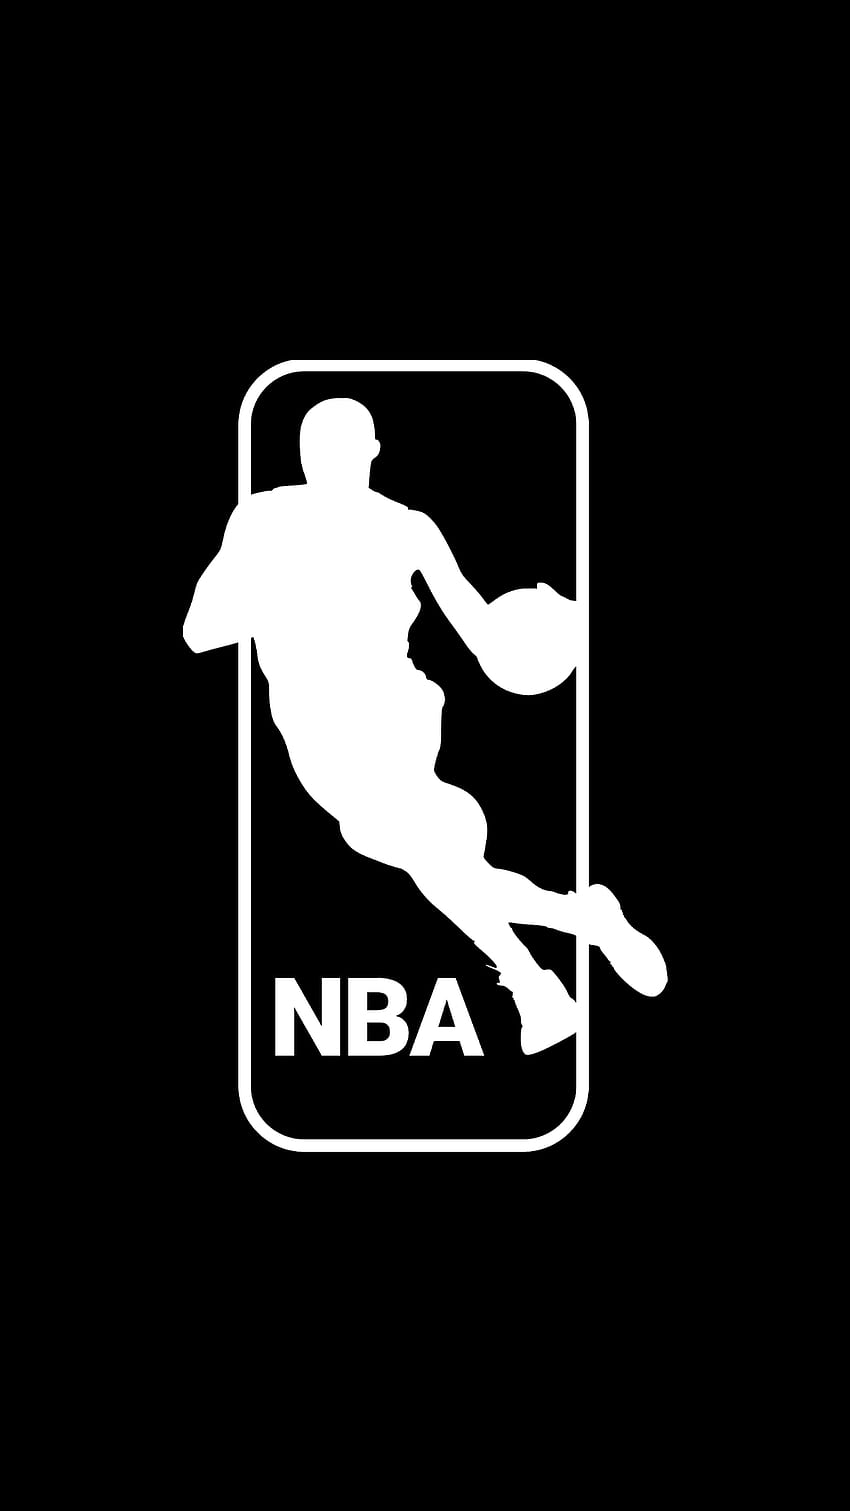 Kobe Bryant Cool for Phone, NBA Black and White HD phone wallpaper